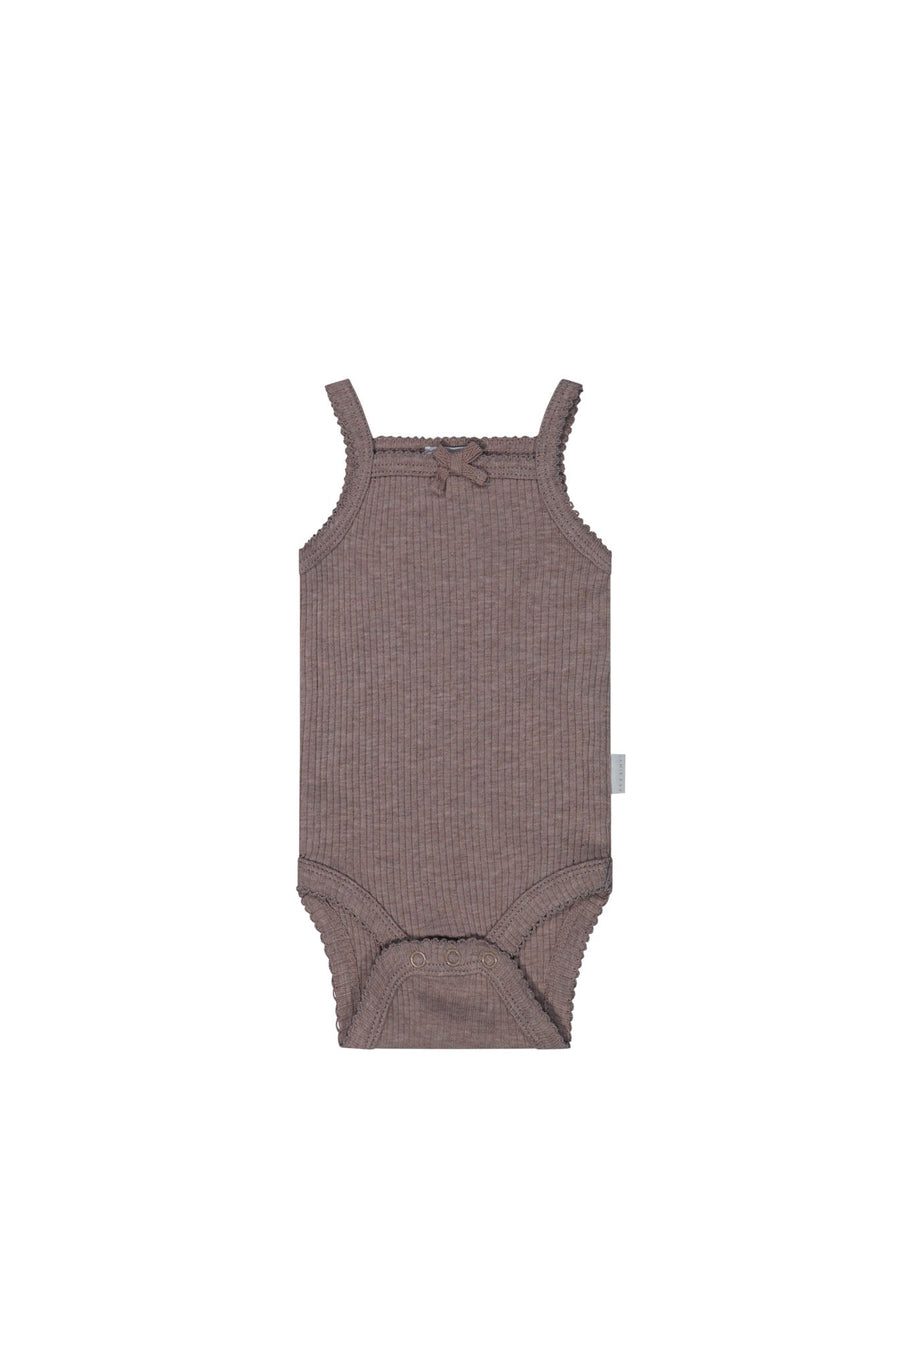 Organic Cotton Modal Singlet Bodysuit - Truffle Marle Childrens Bodysuit from Jamie Kay USA